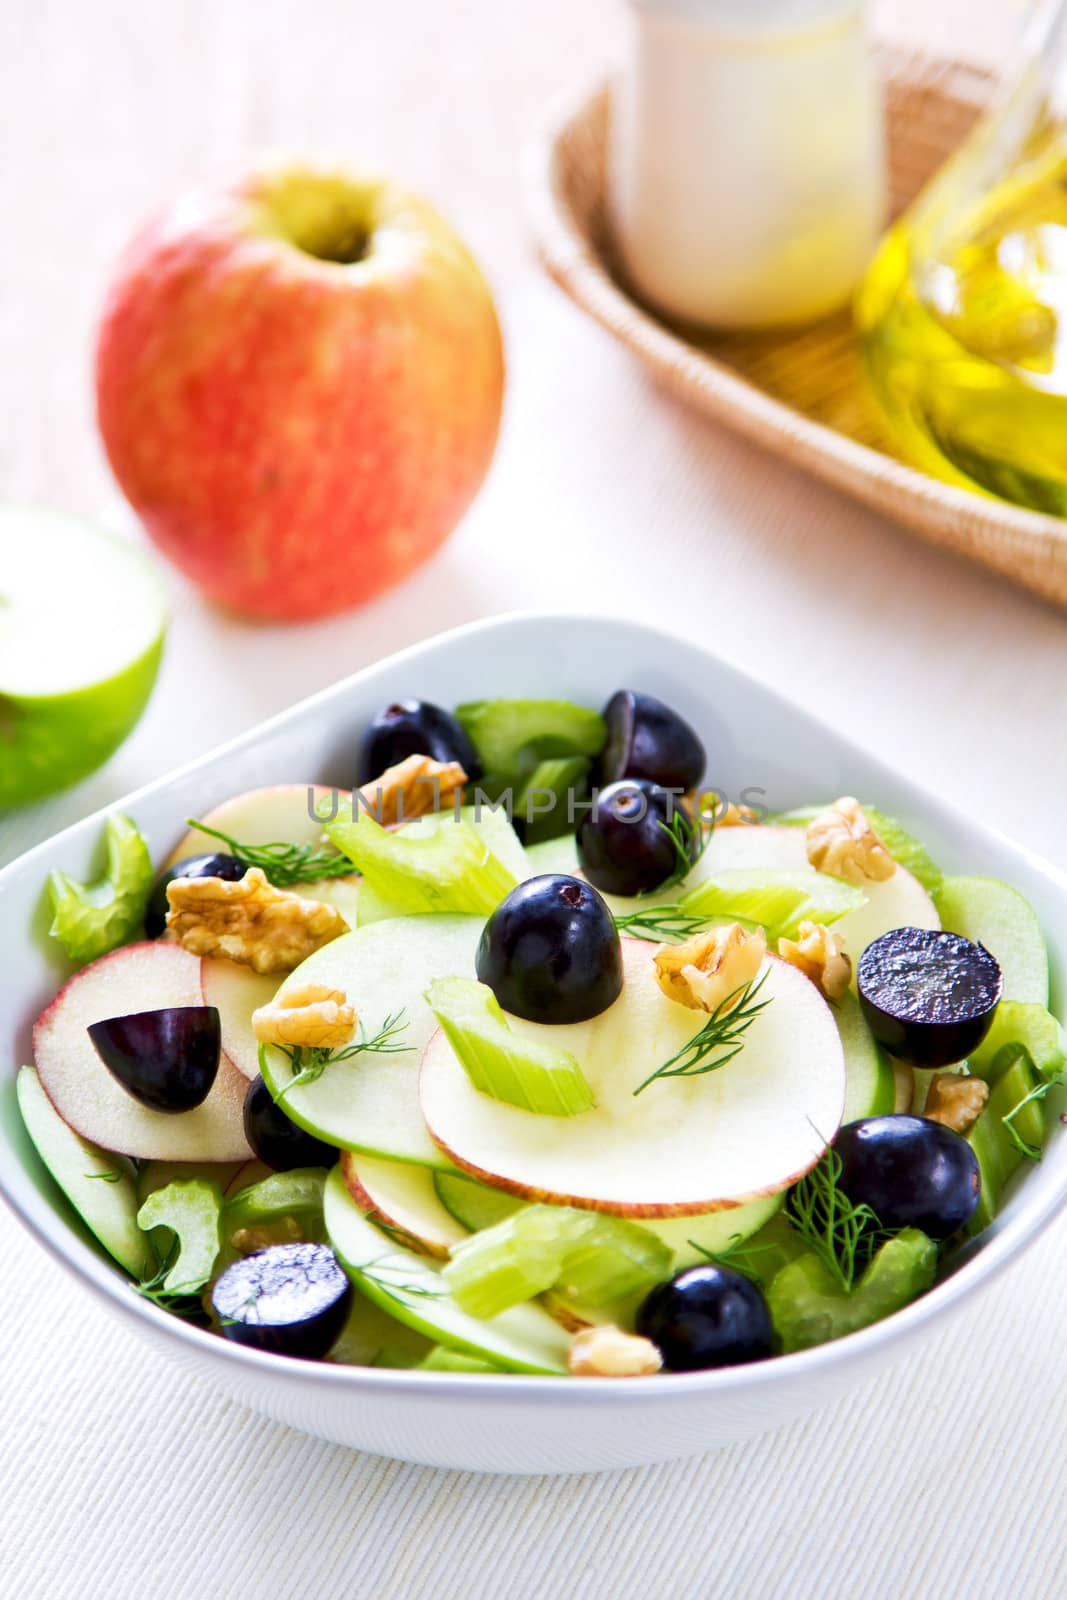 Apple with Celery, Grape and Walnut salad